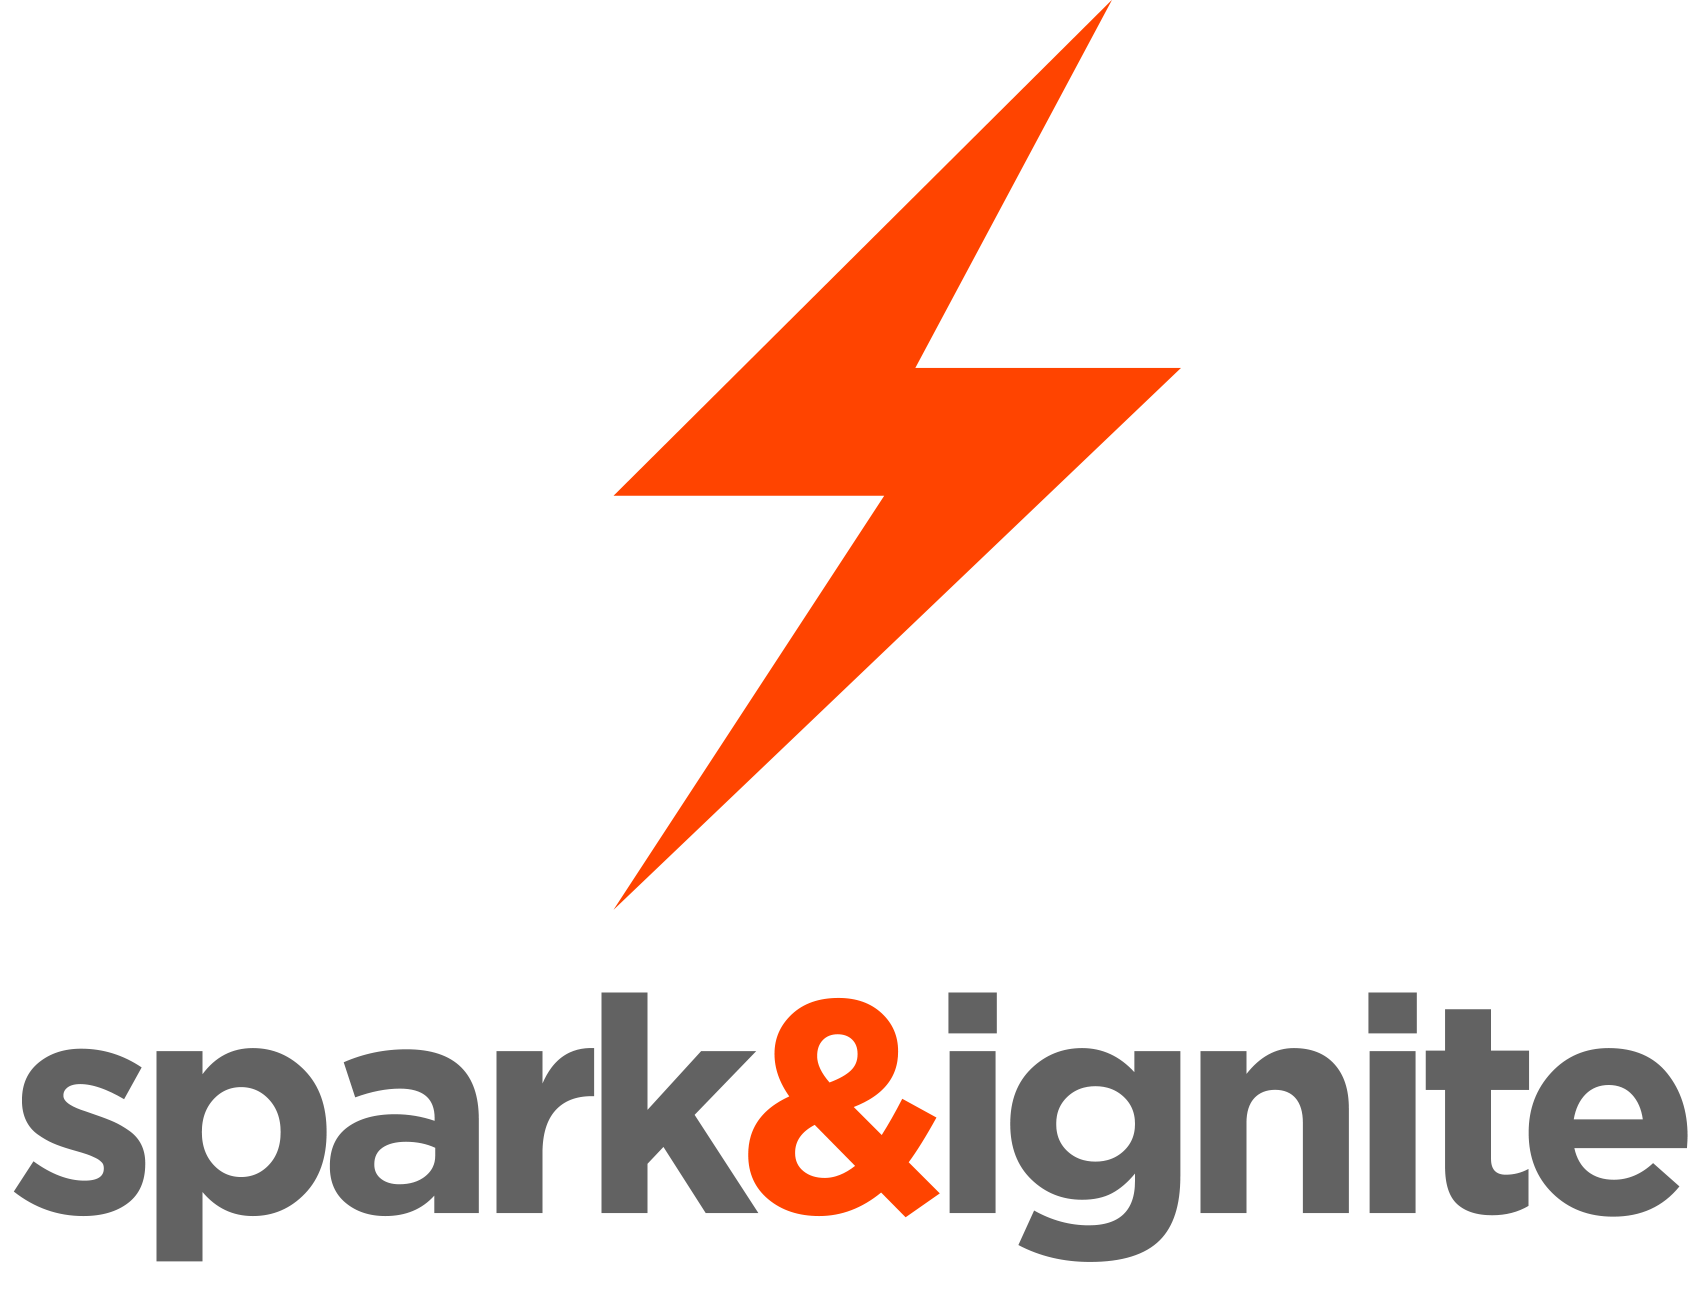 video production company logo spark